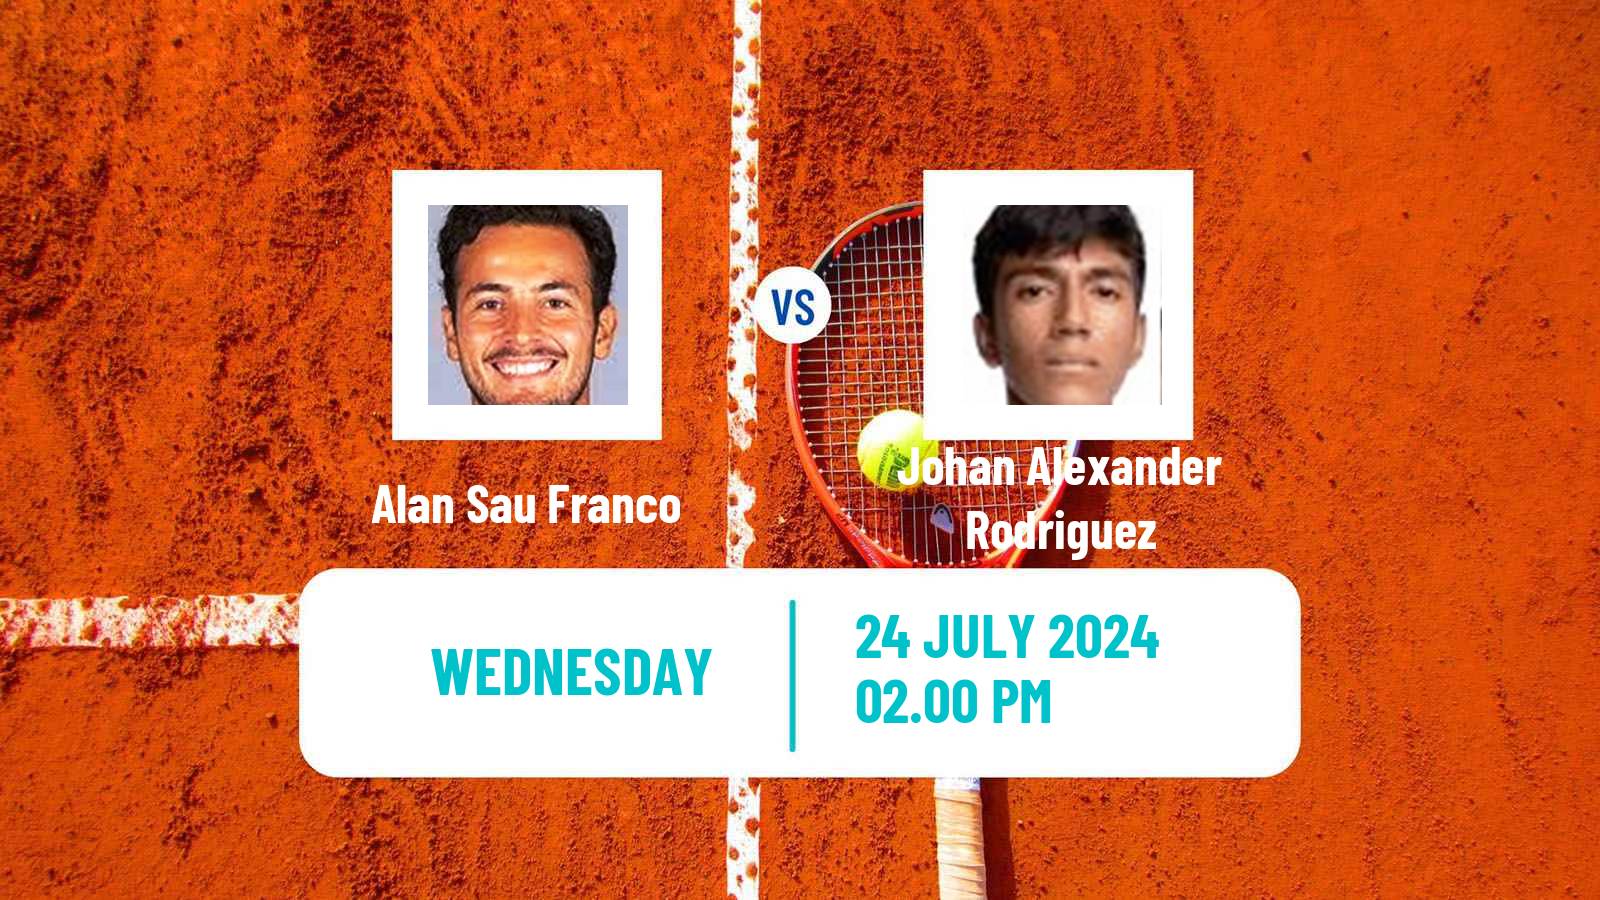 Tennis ITF M15 Huamantla 2 Men Alan Sau Franco - Johan Alexander Rodriguez